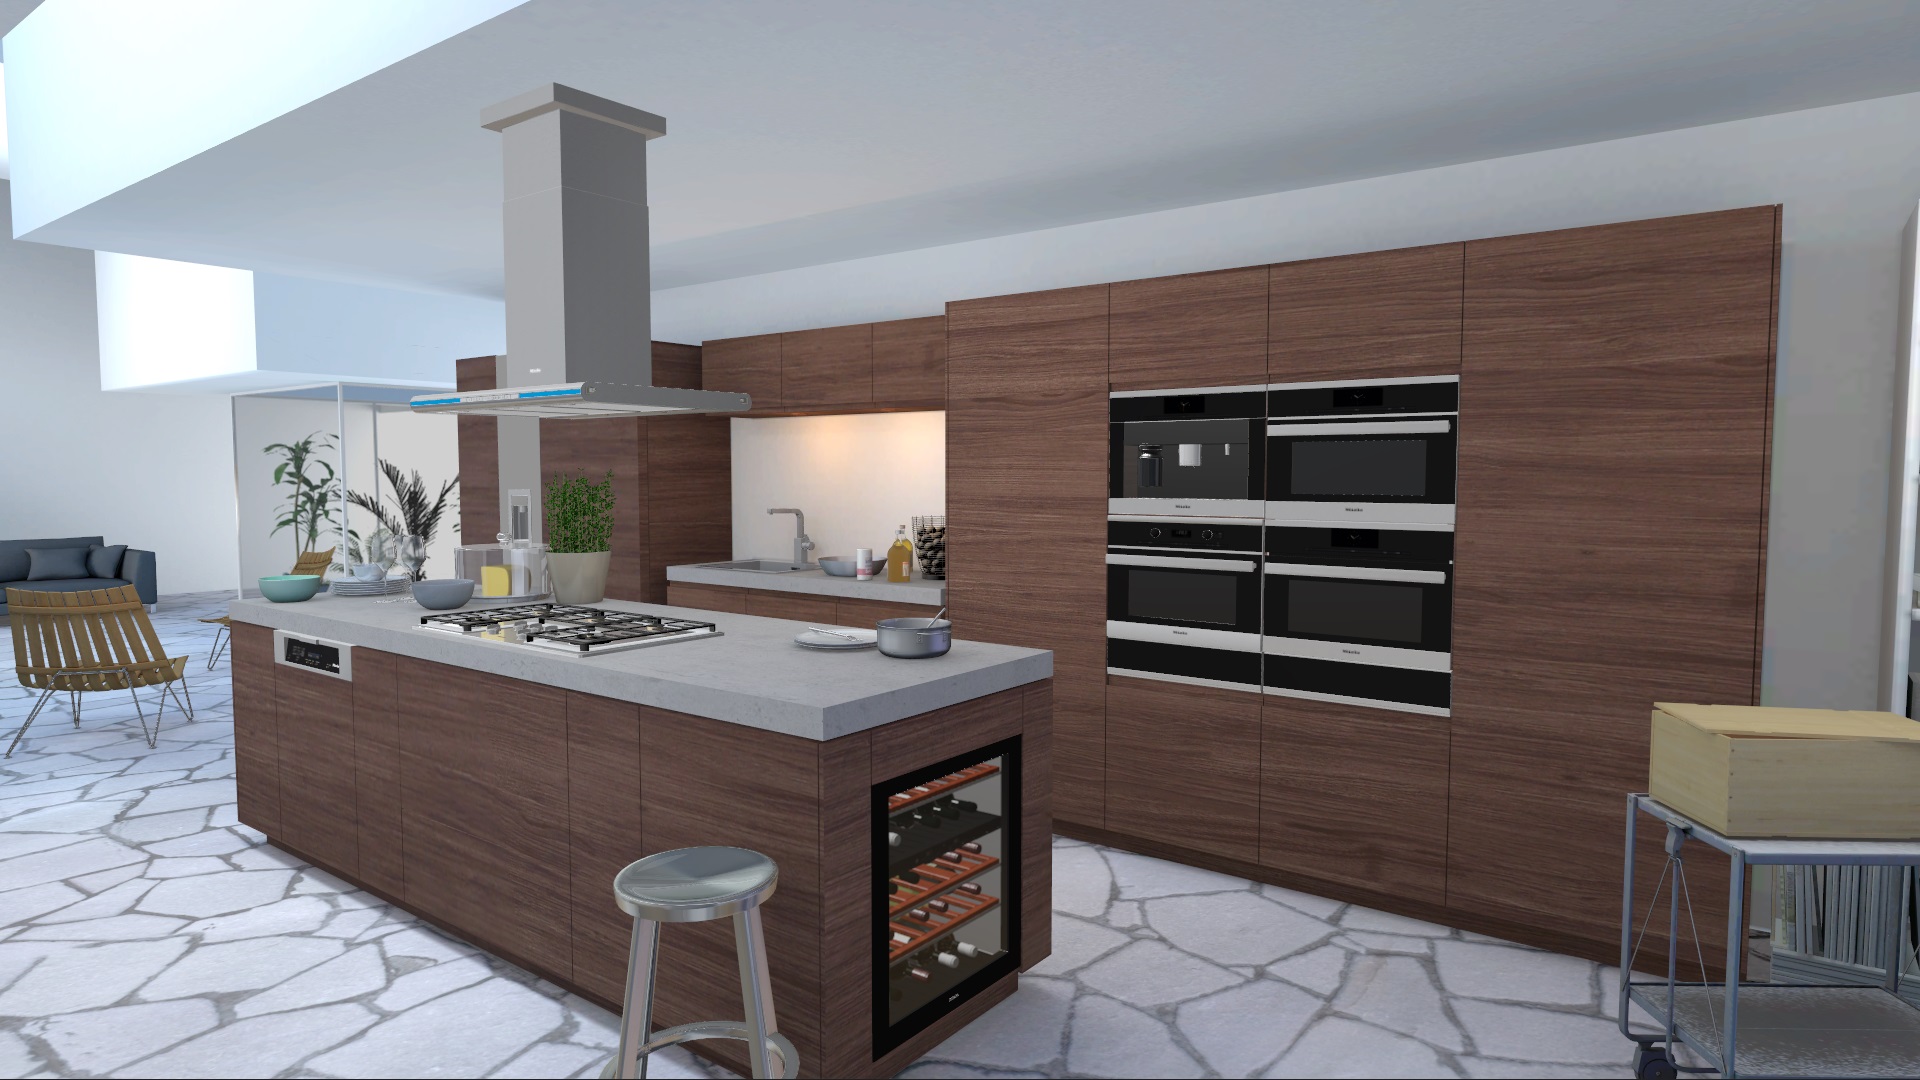 miele kitchen appliance visualizer ambiente auswahl braune kueche